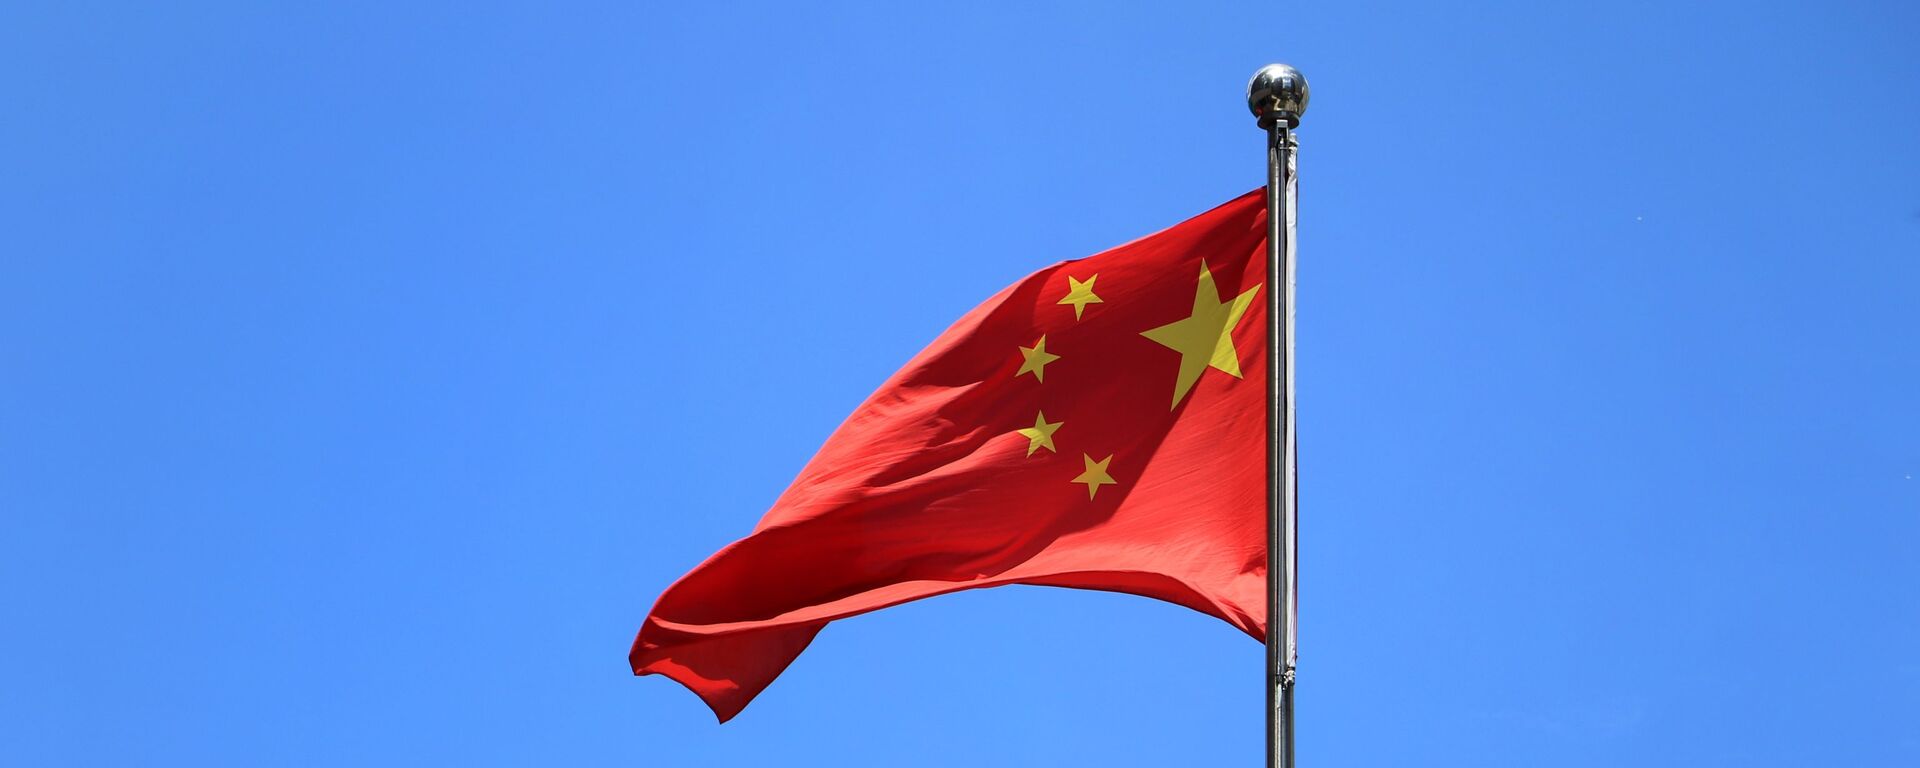 La bandera de China - Sputnik Mundo, 1920, 30.09.2021